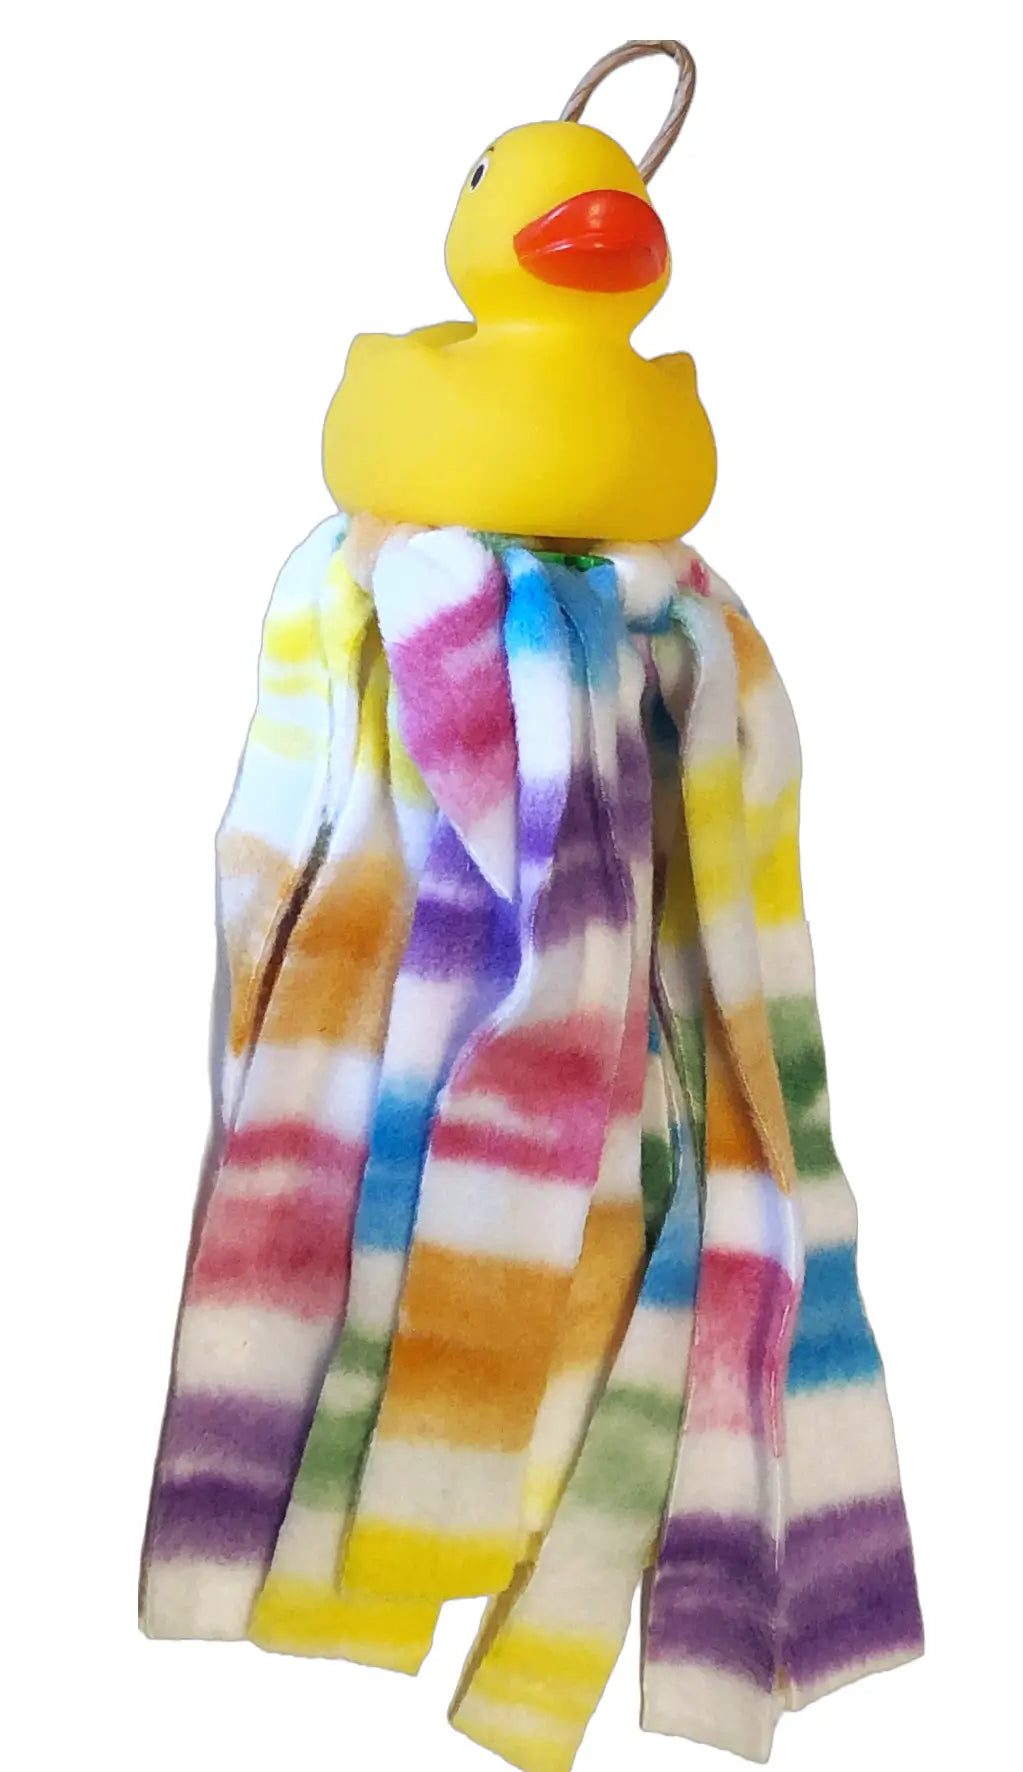 Rainbow fleece parro toy with yellow duck